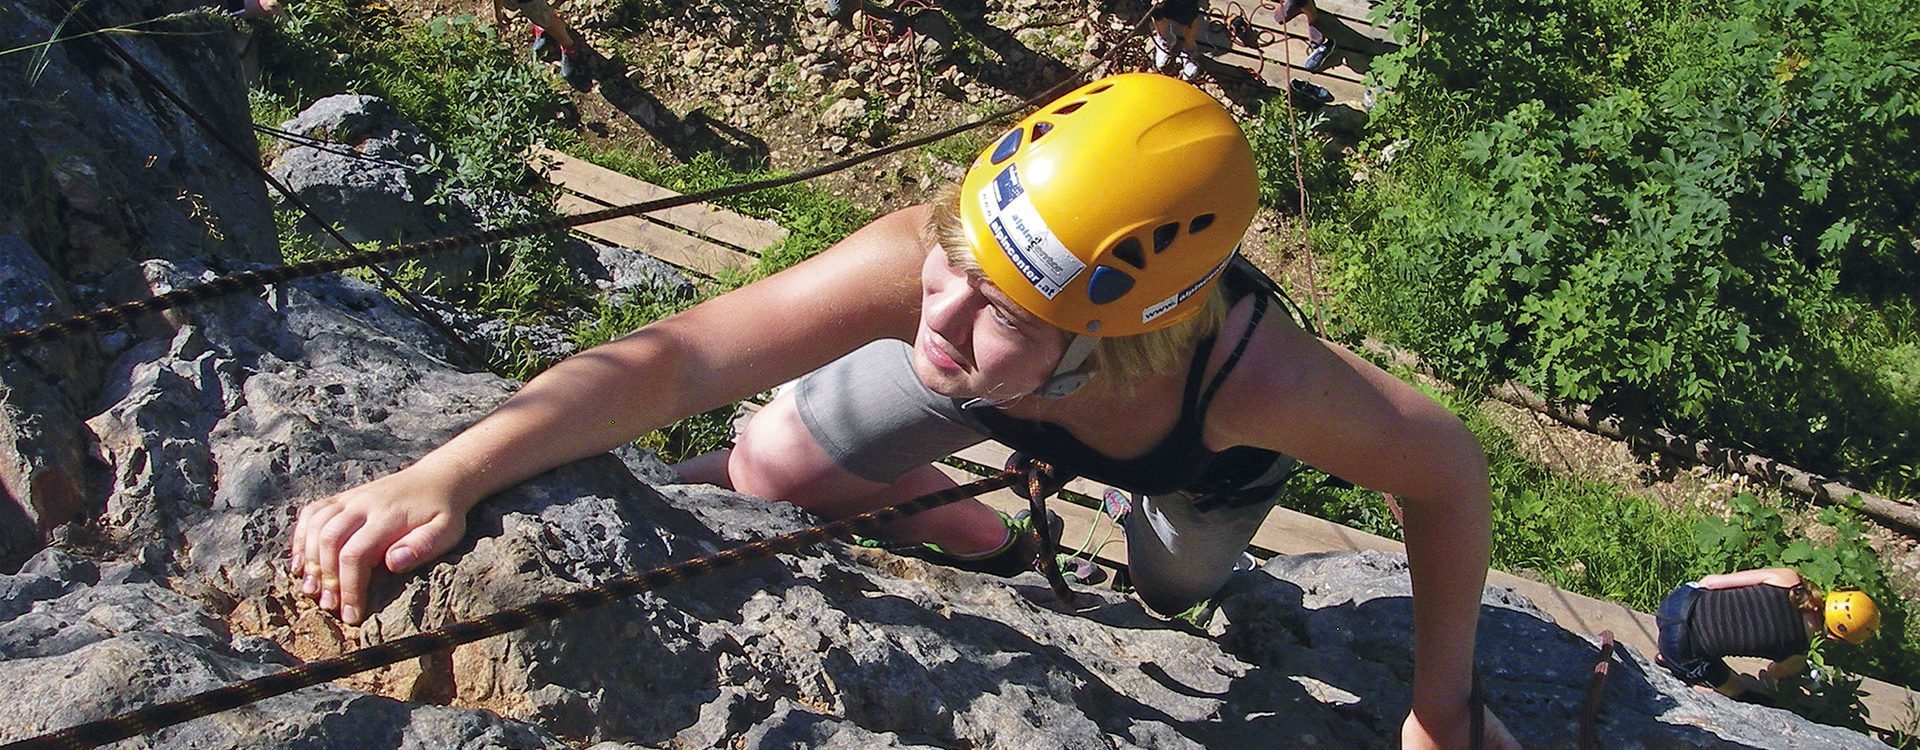 Klettern - Sommersportwoche in Wagrain, Salzburger Land